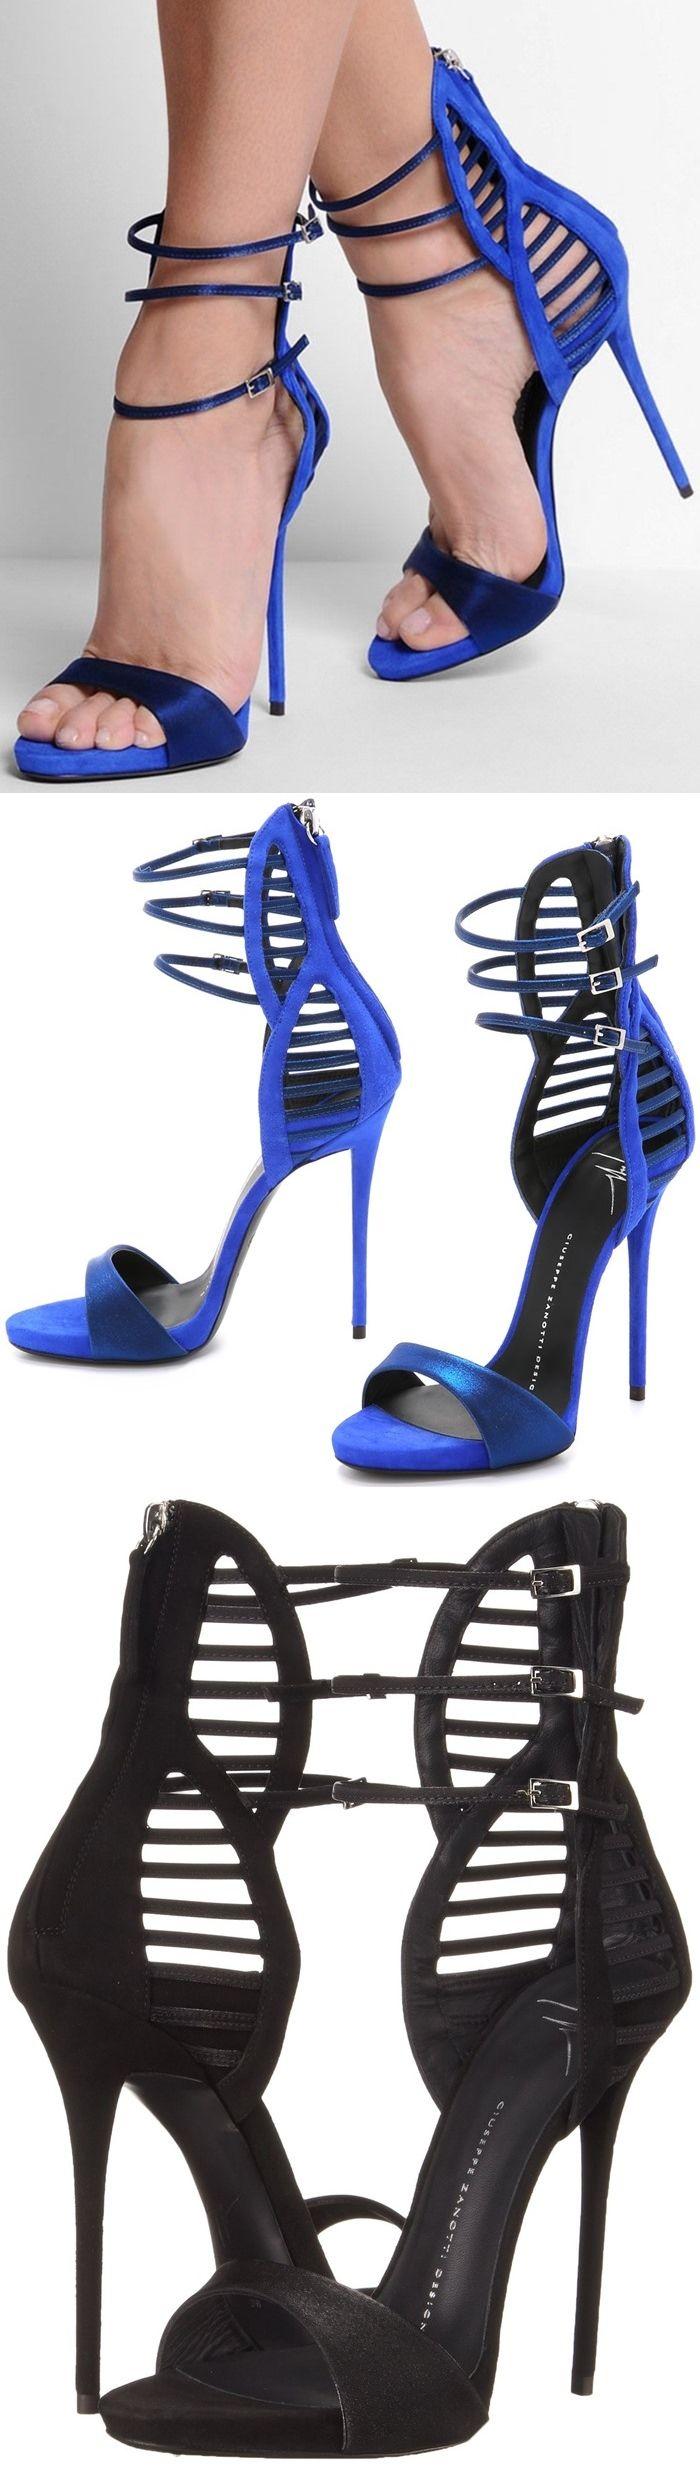 زفاف - 2 New Heels From Legendary Shoe Designer Giuseppe Zanotti